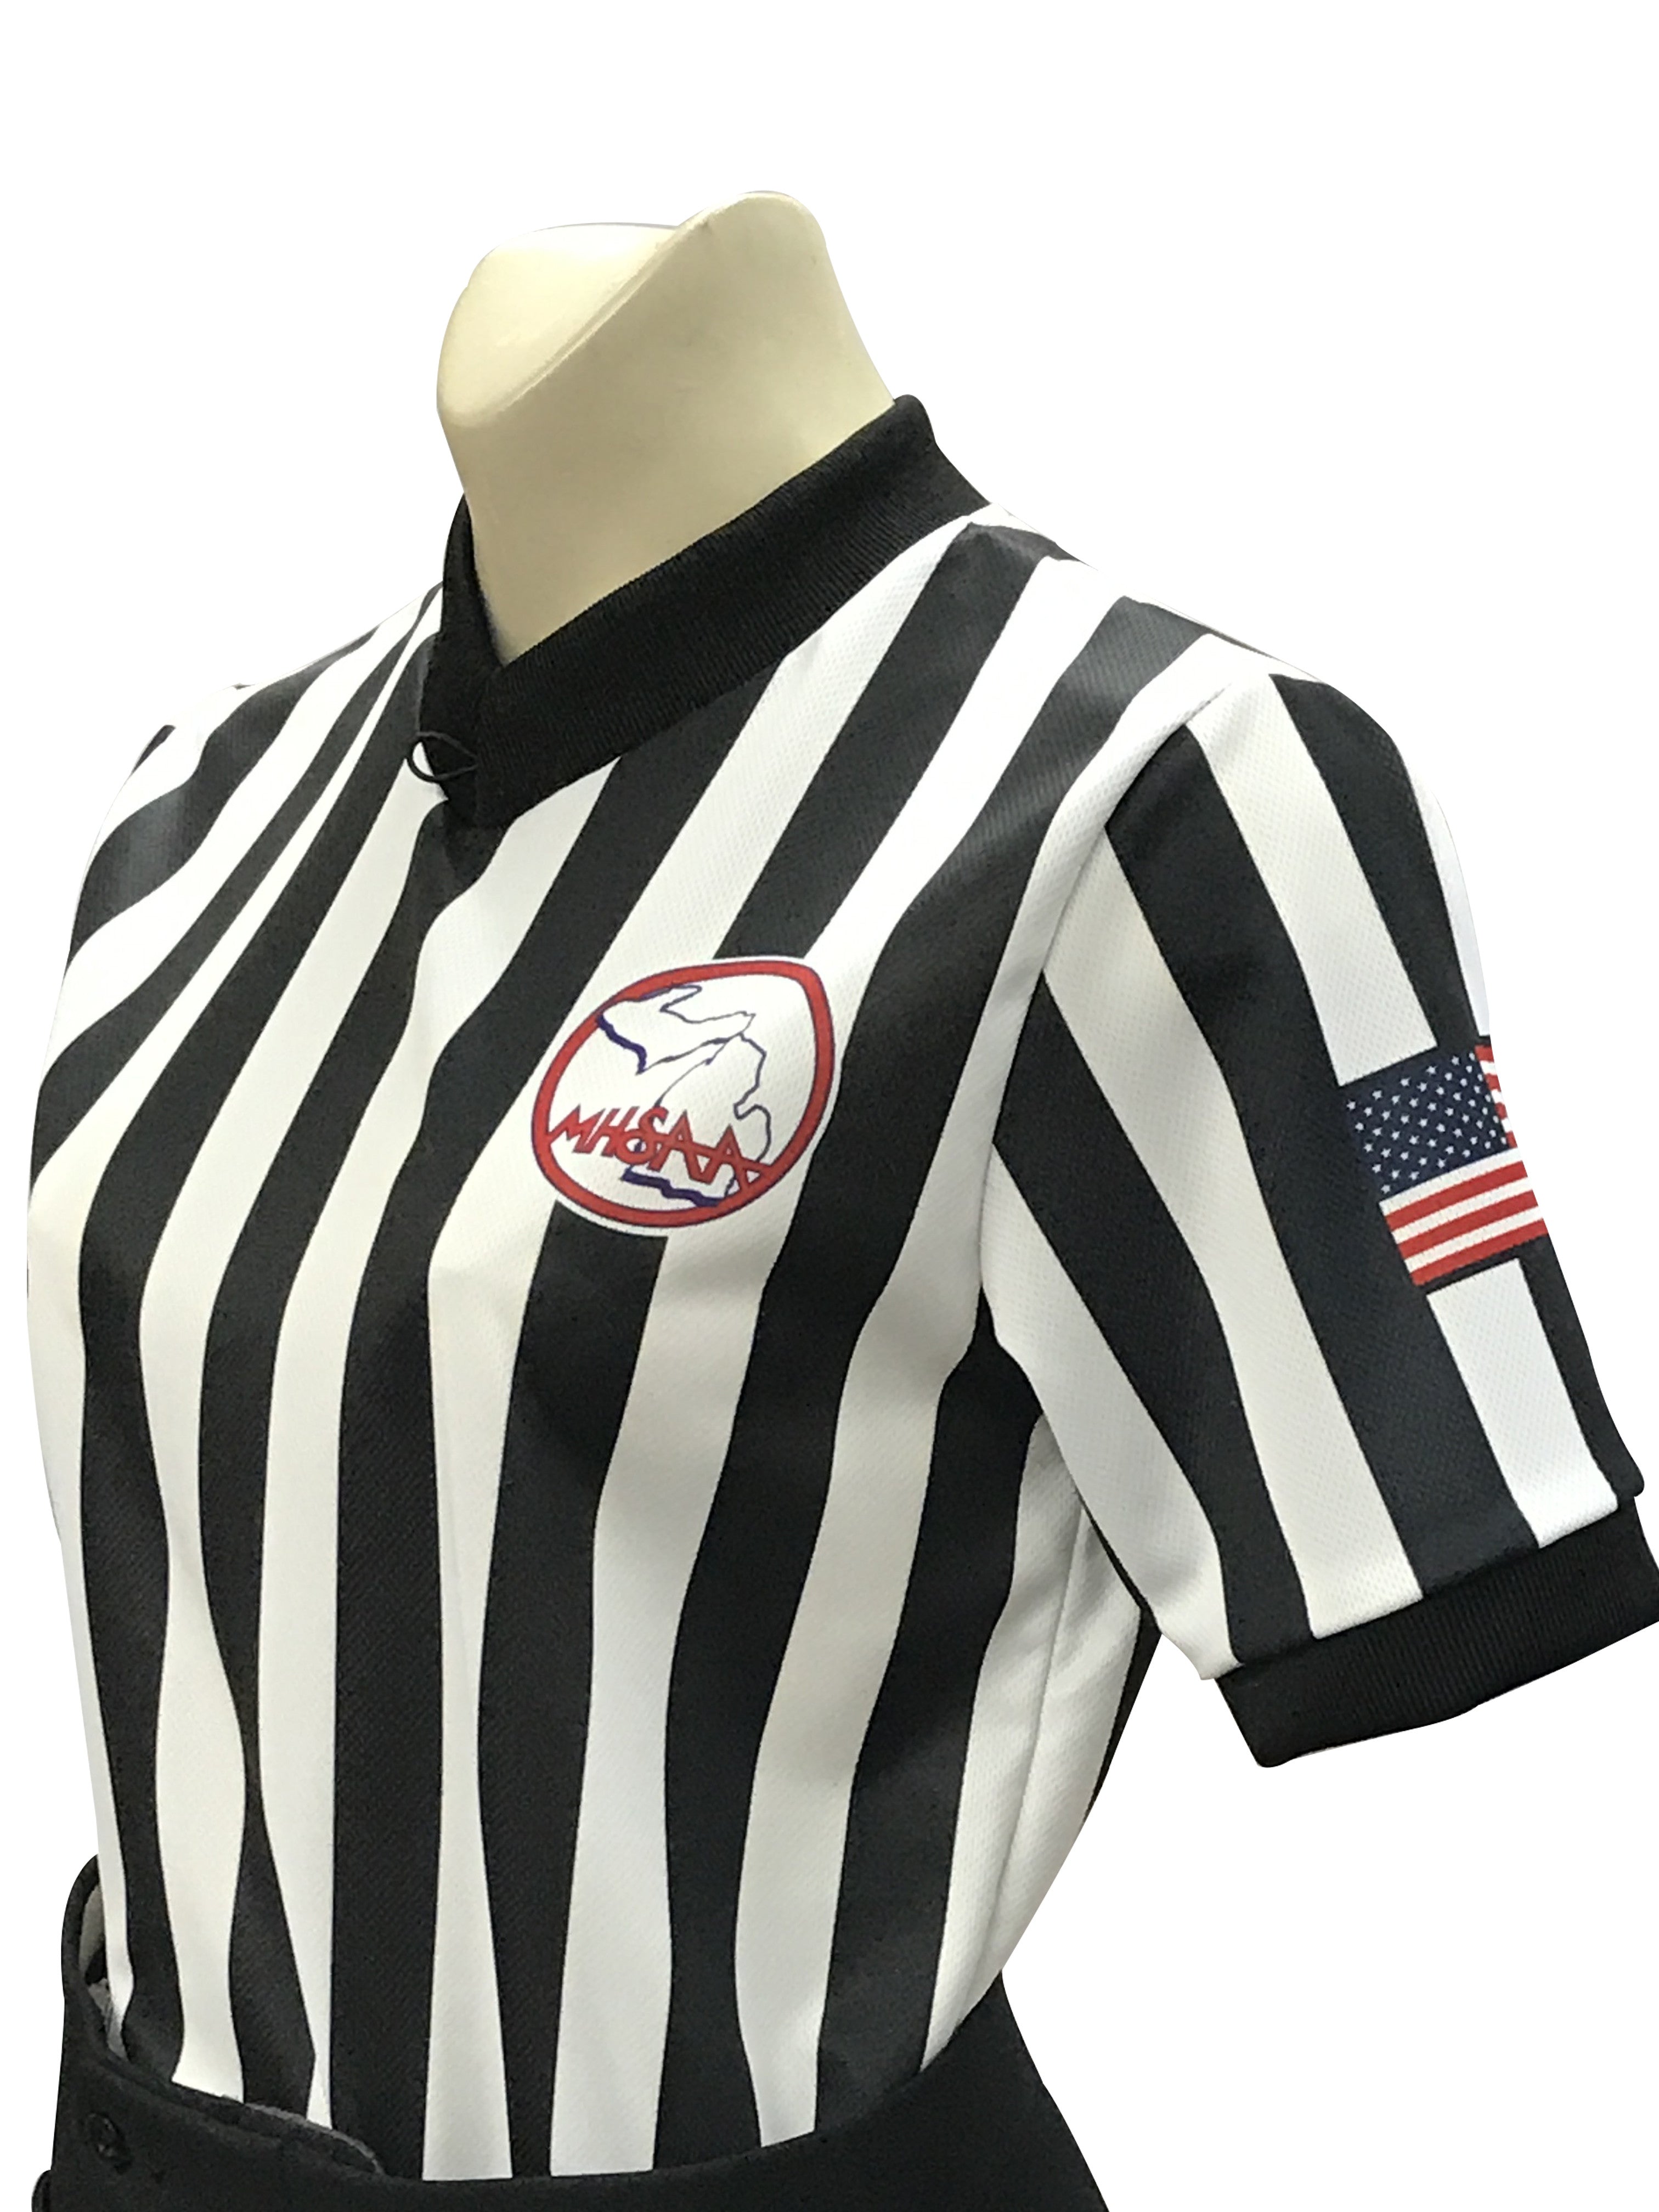 Smitty NCAA Women's Performance Mesh Basketball Referee Shirt - Men's Cut